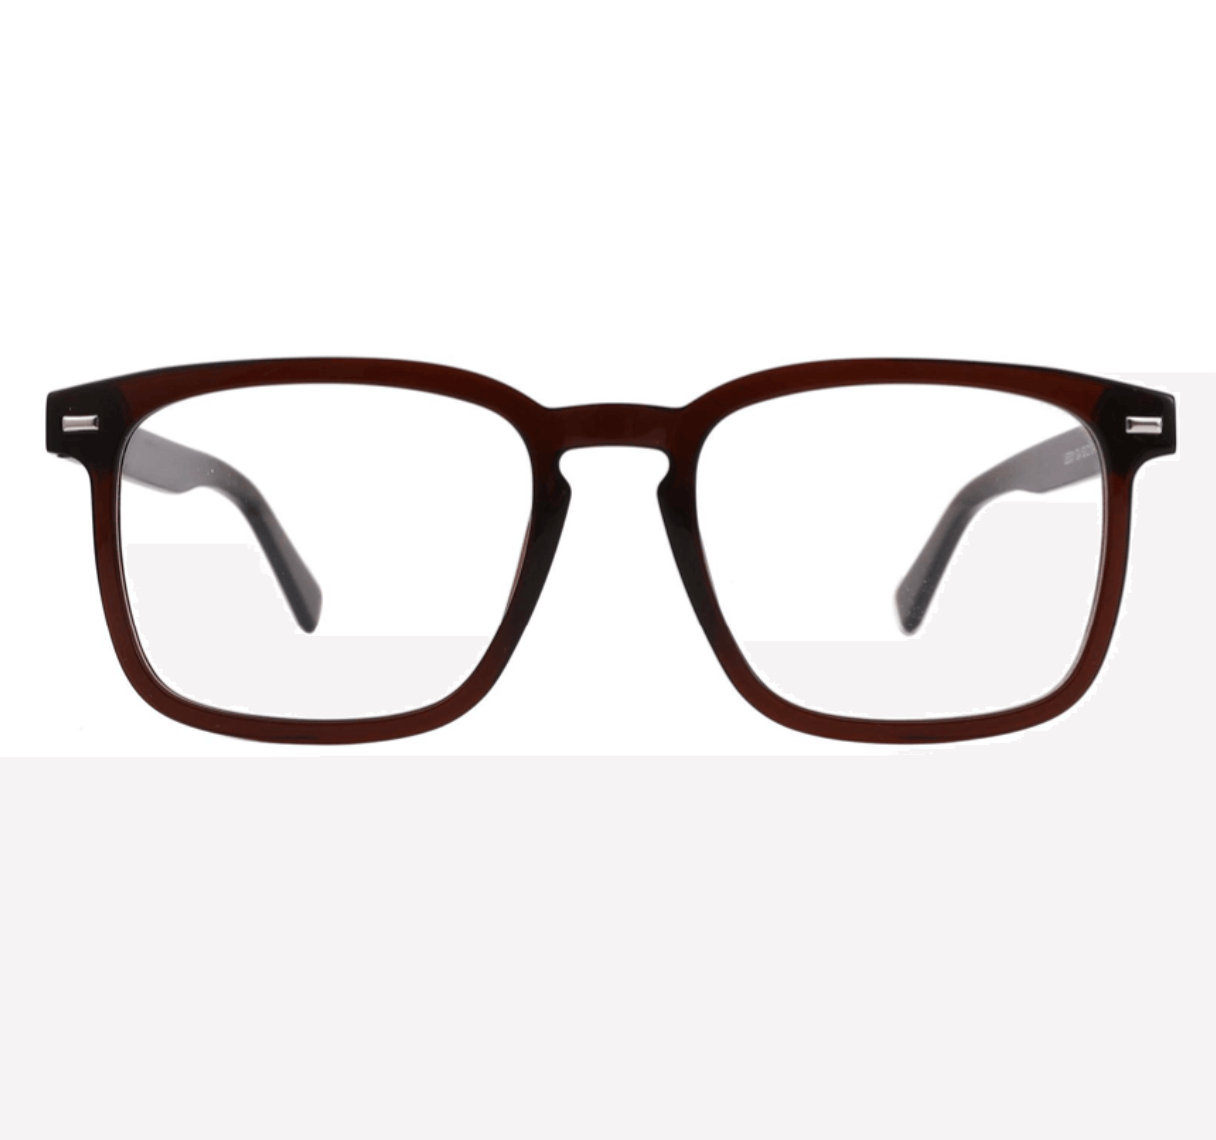 Acetate glasses frame, eyewear frame manufacturers, wholesale eyewear frames, custom eyewear frames